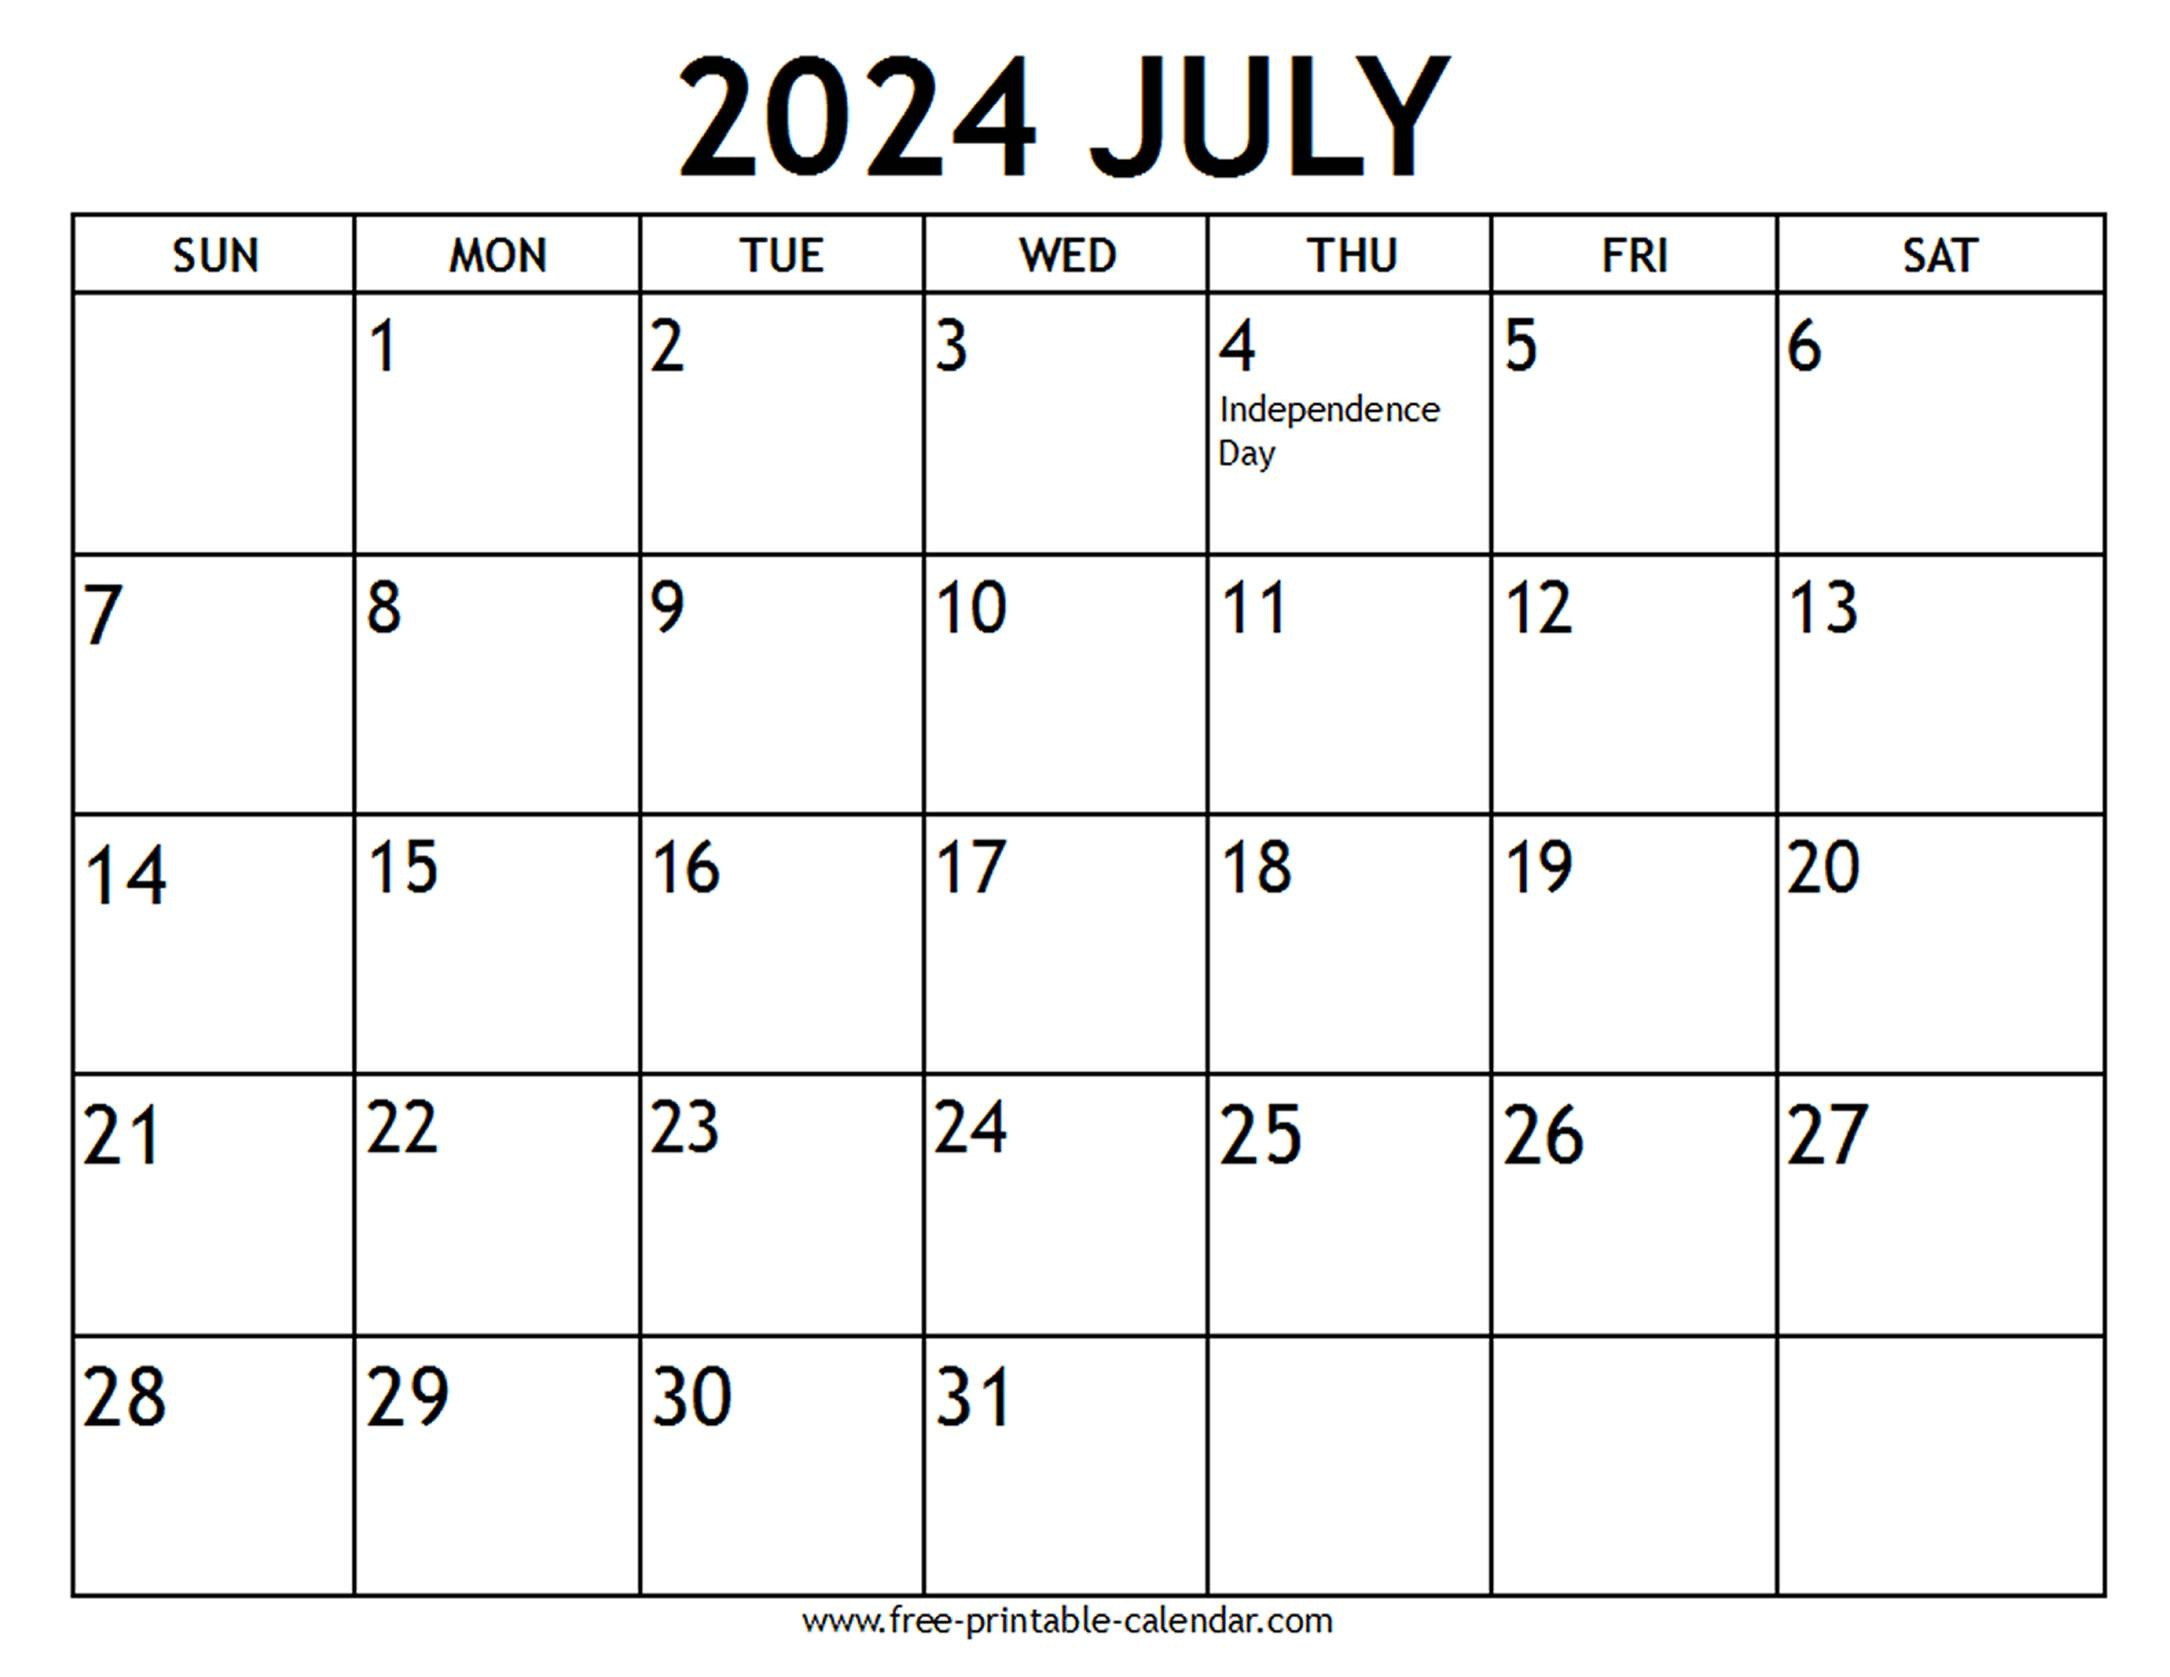 July 2024 Calendar Us Holidays - Free-Printable-Calendar with 2024 July Calendar With Holidays